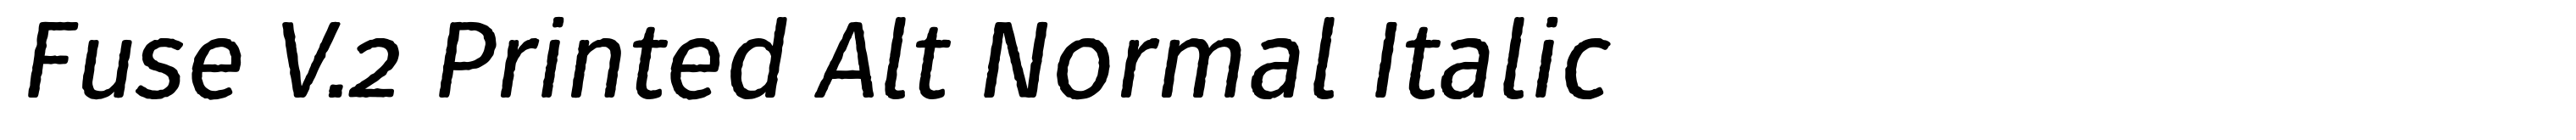 Fuse V.2 Printed Alt Normal Italic